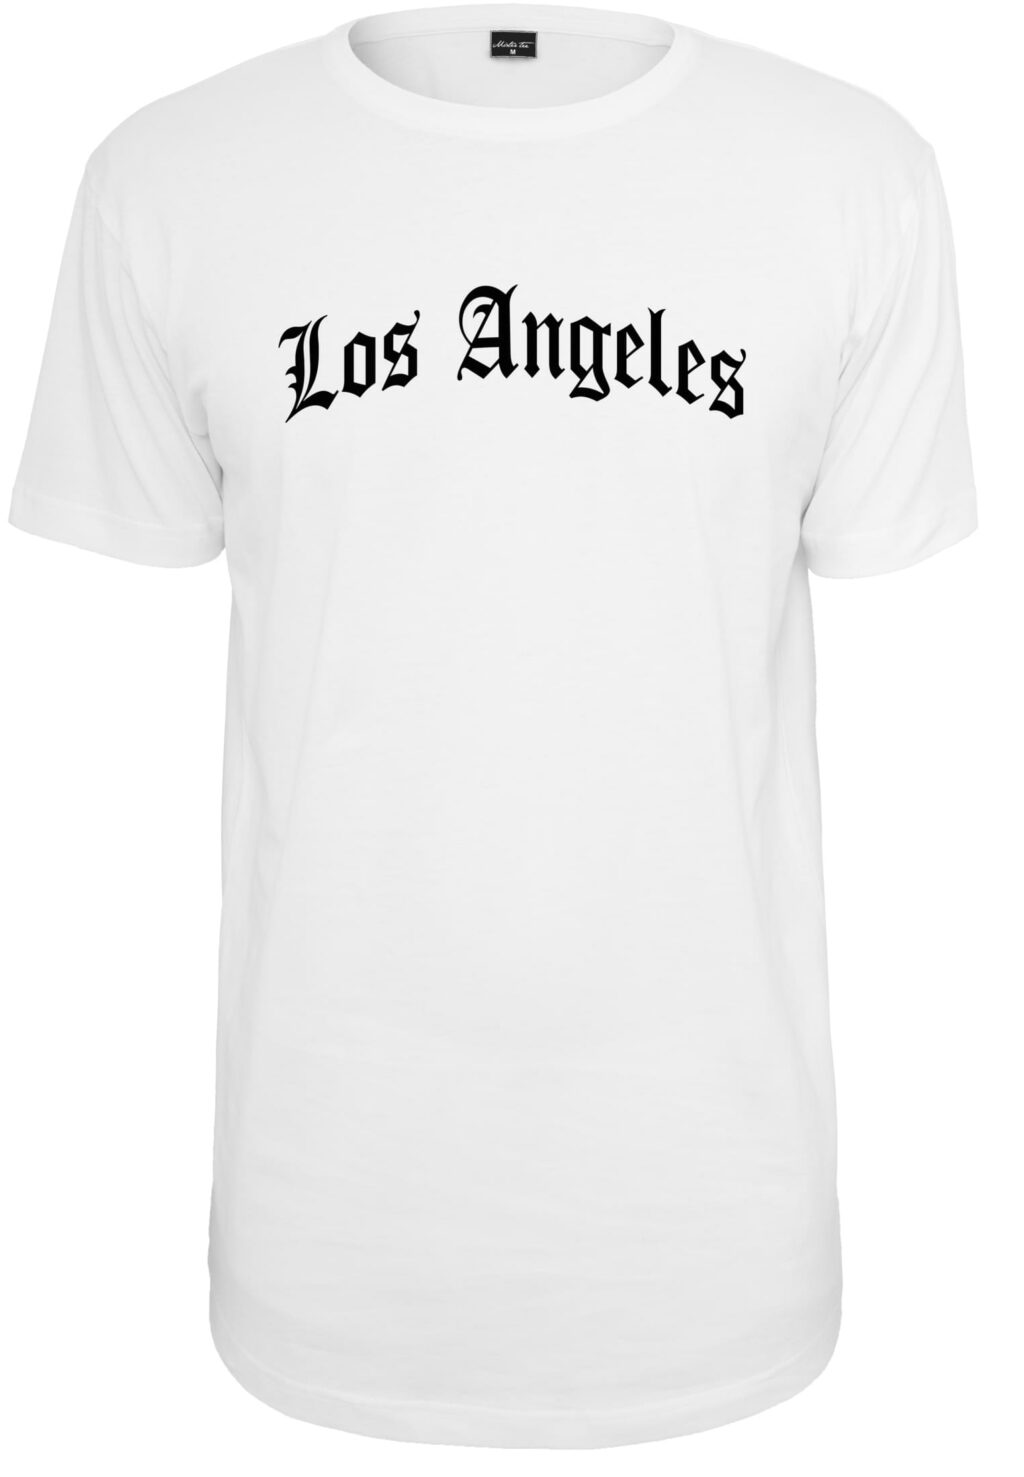 Los Angeles Wording Tee white MT2565